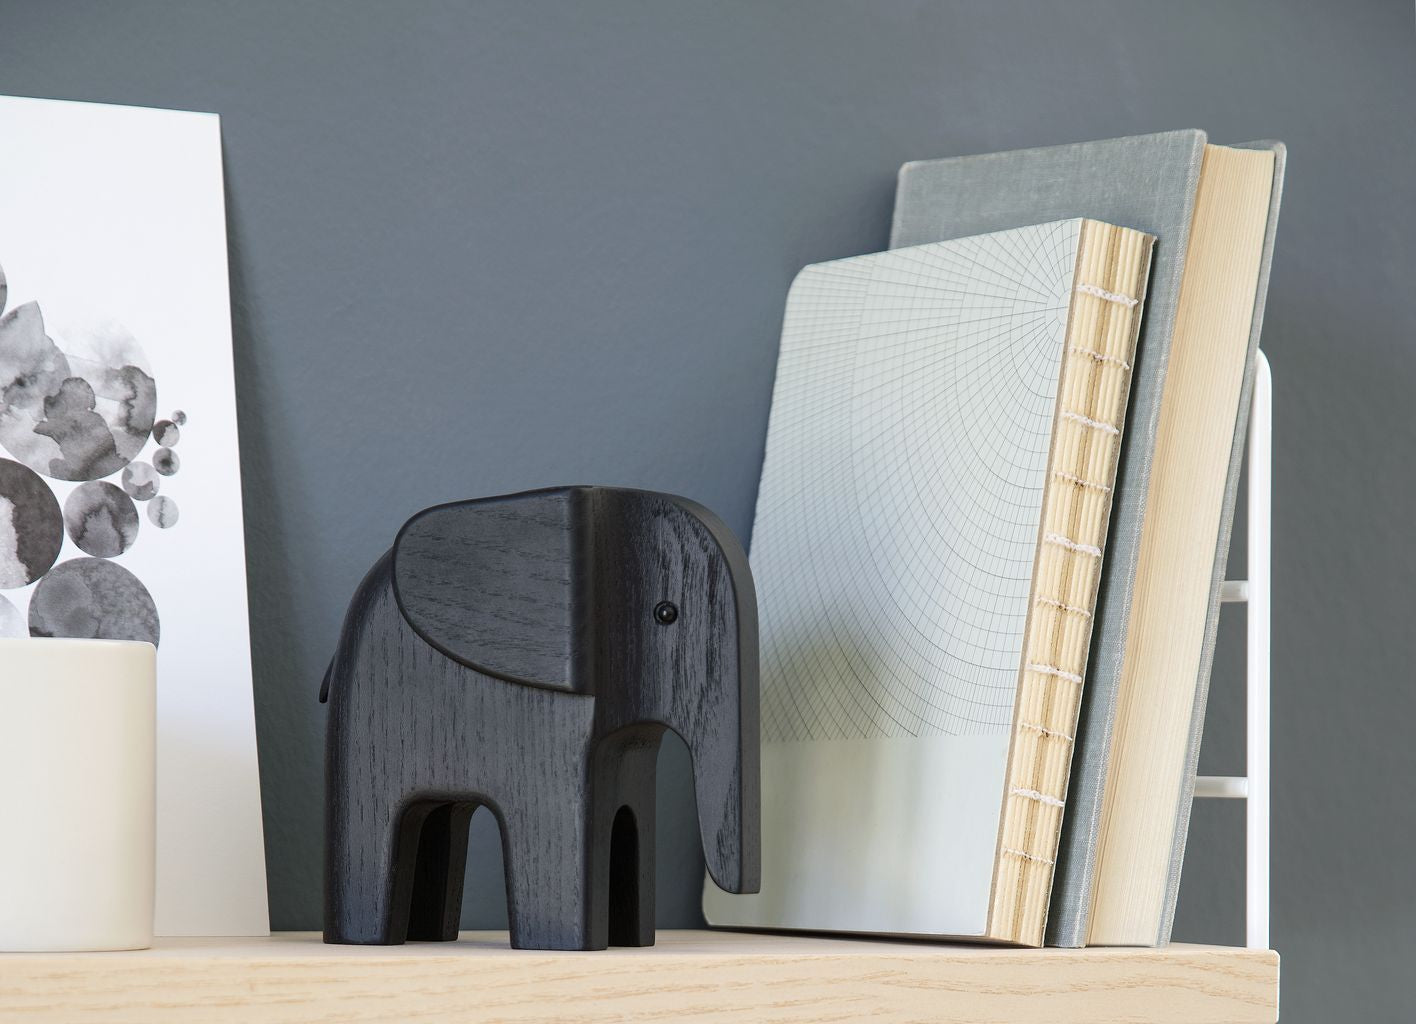 Novoform Design Elephant Decorative Figure, Ash Black